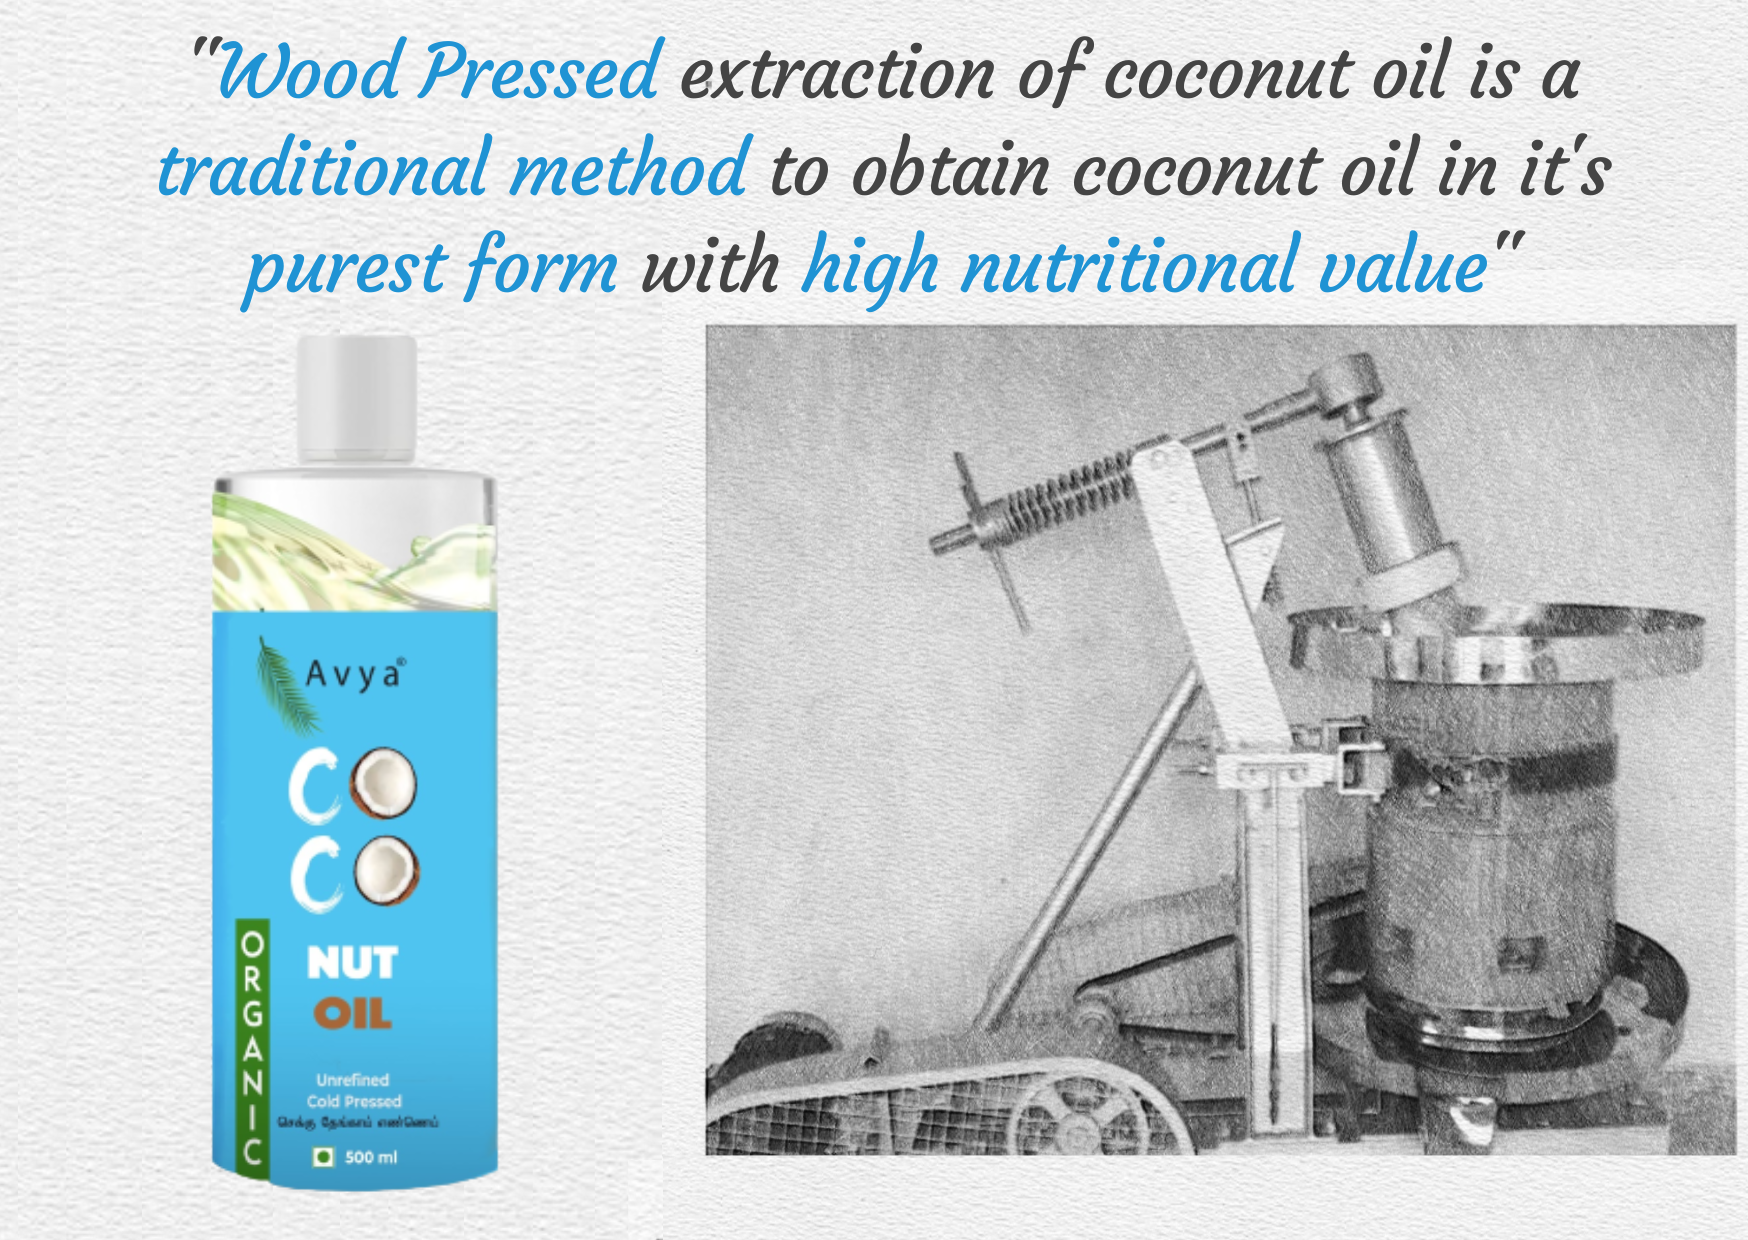 Avya Wood-Pressed Organic Coconut Oil